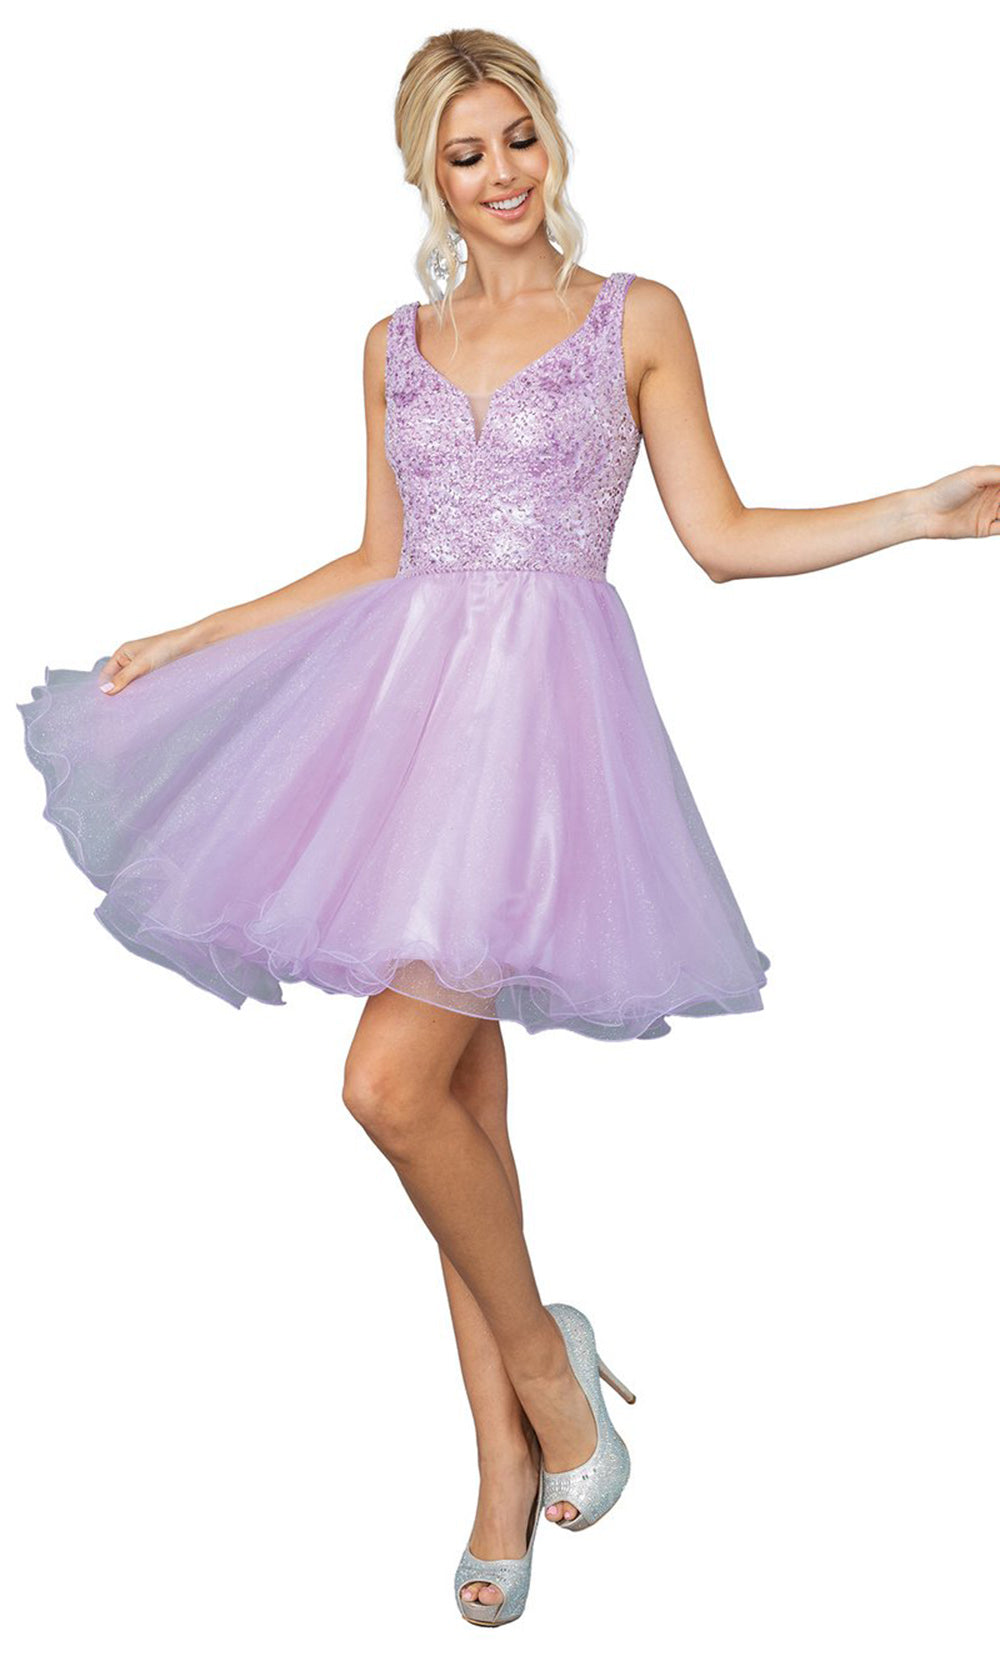 Dancing Queen - 3243 Sleeveless Sweetheart Glitter Tulle A-Line Dress In Purplegrade 8 grad dresses, graduation dresses